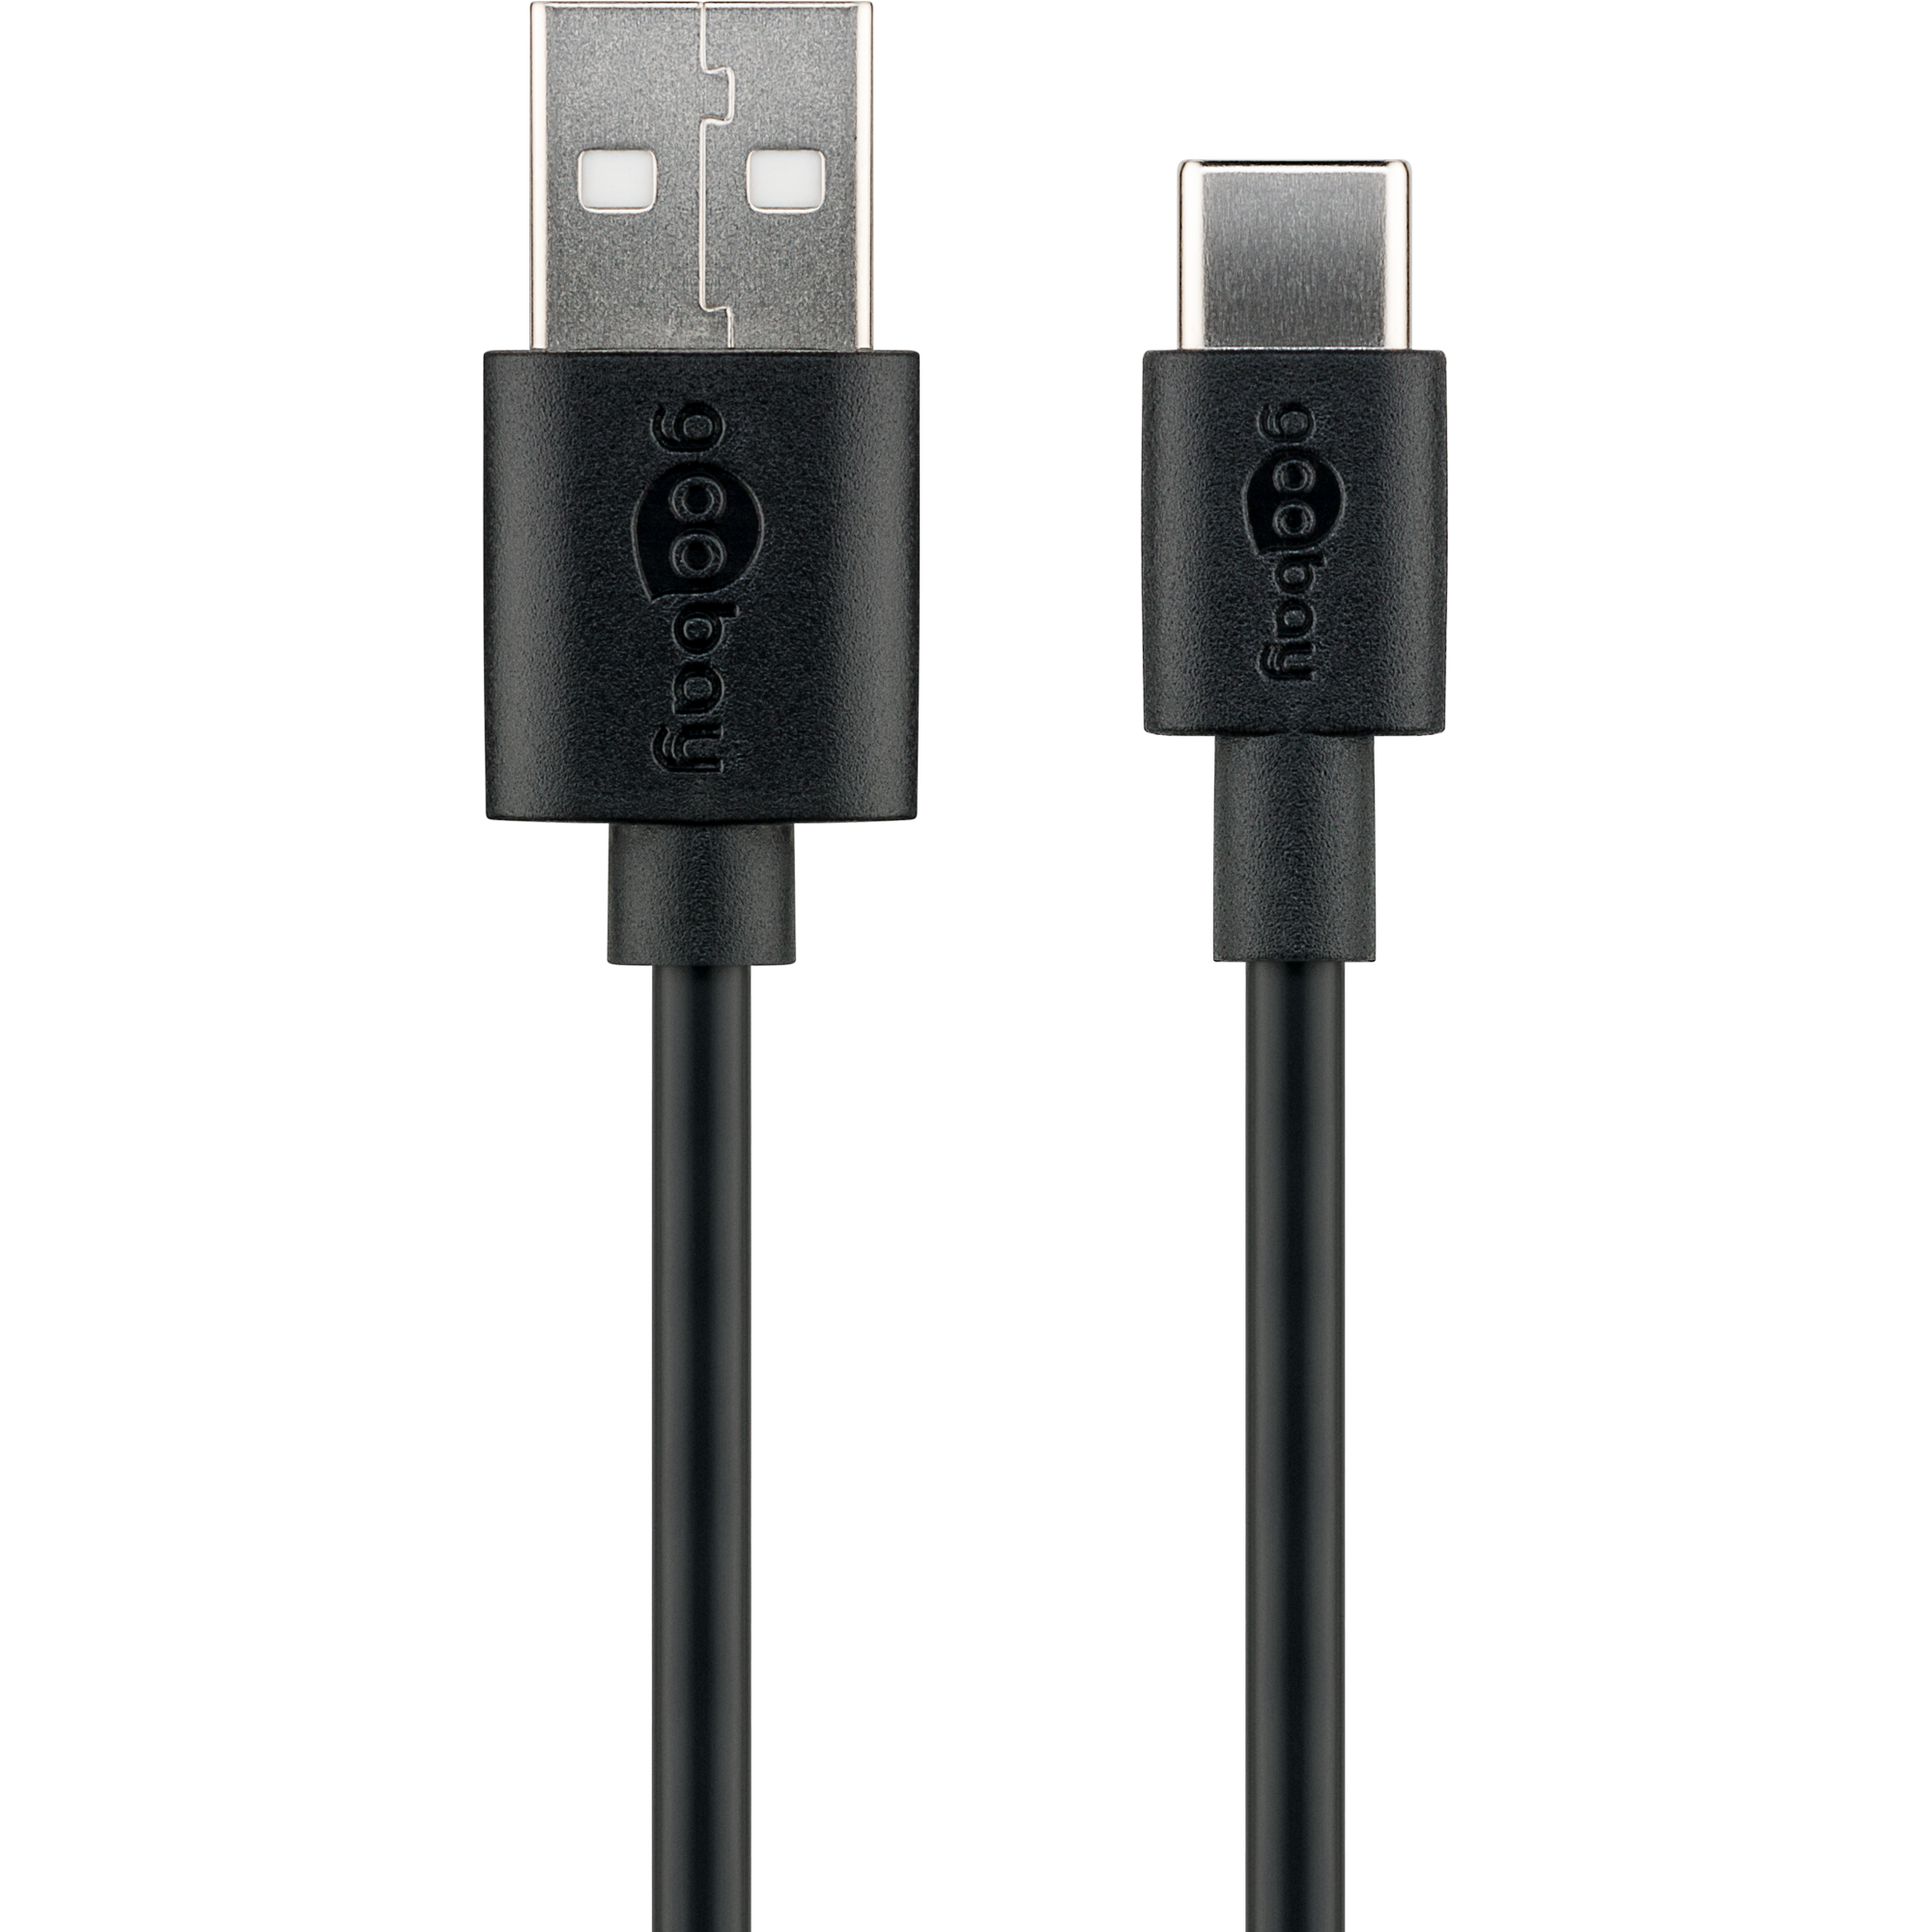 Dual-USB-Ladegerät, USB-C Ladekabel + product picture